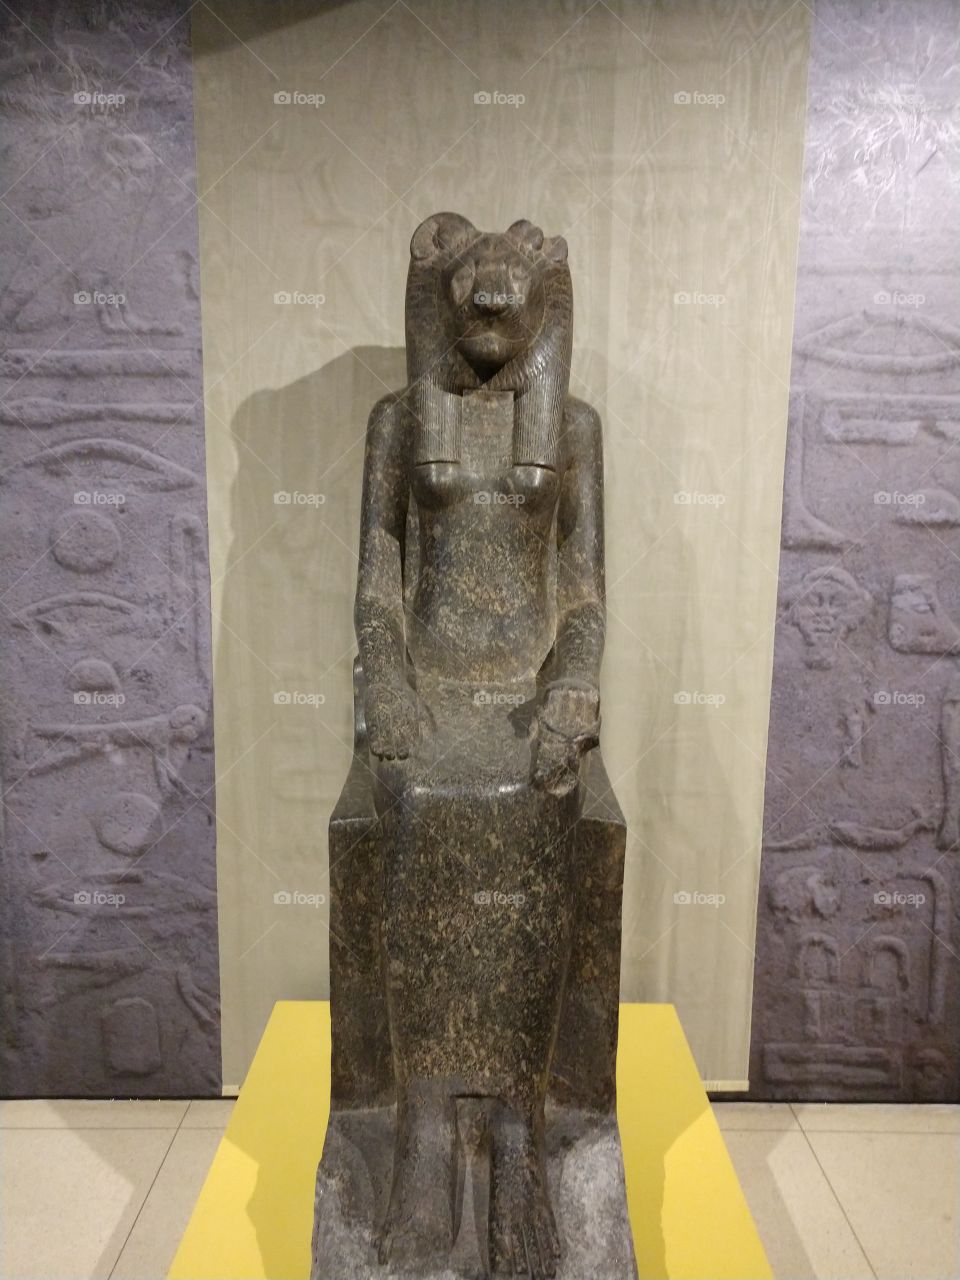 Egyptian artwork in museum exhibit